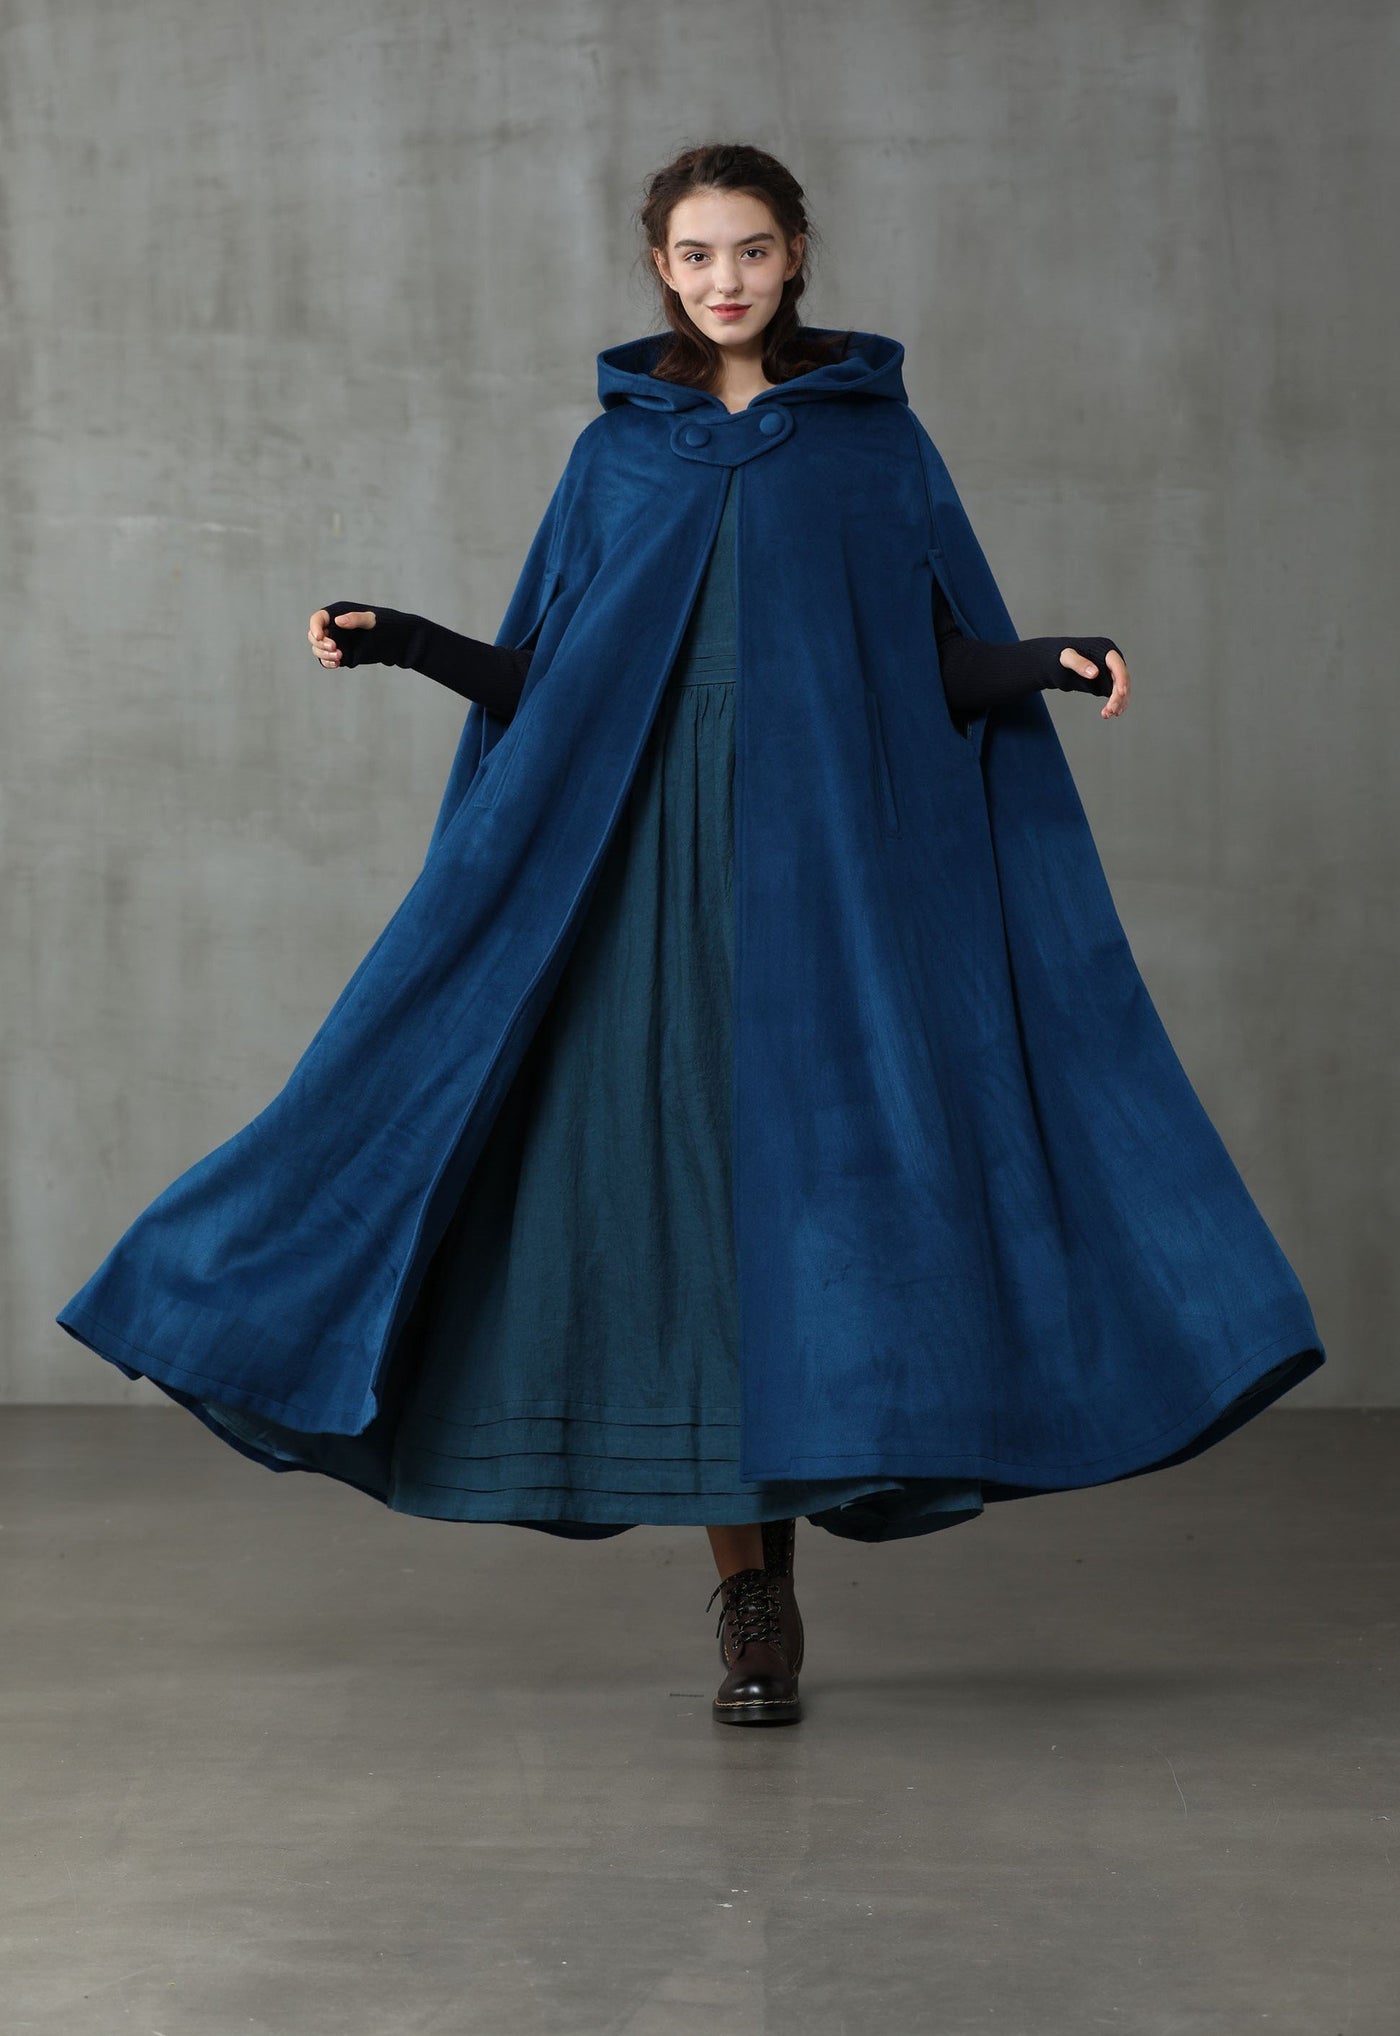 Christmas Outlander 2020 | 100% Wool Cloak Coat